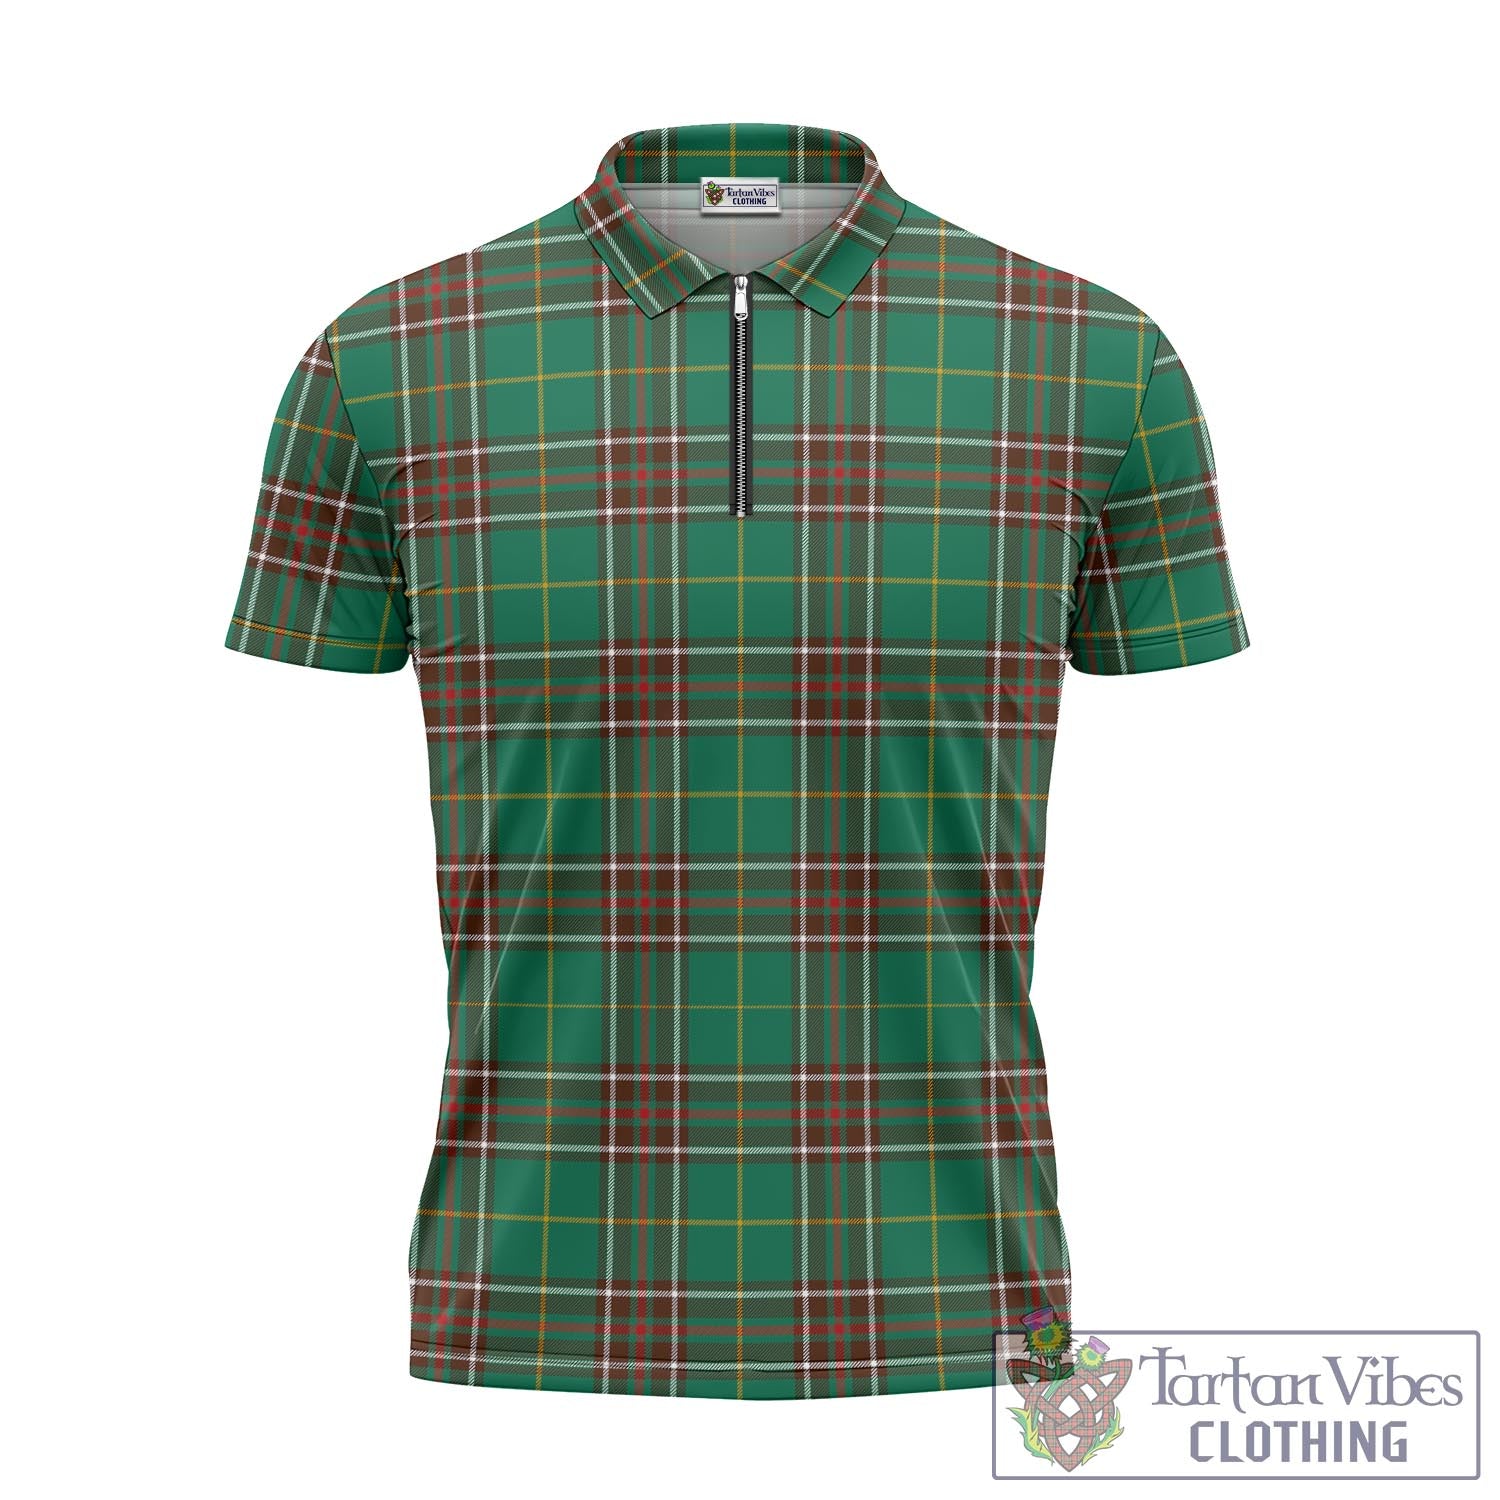 Tartan Vibes Clothing Newfoundland And Labrador Province Canada Tartan Zipper Polo Shirt